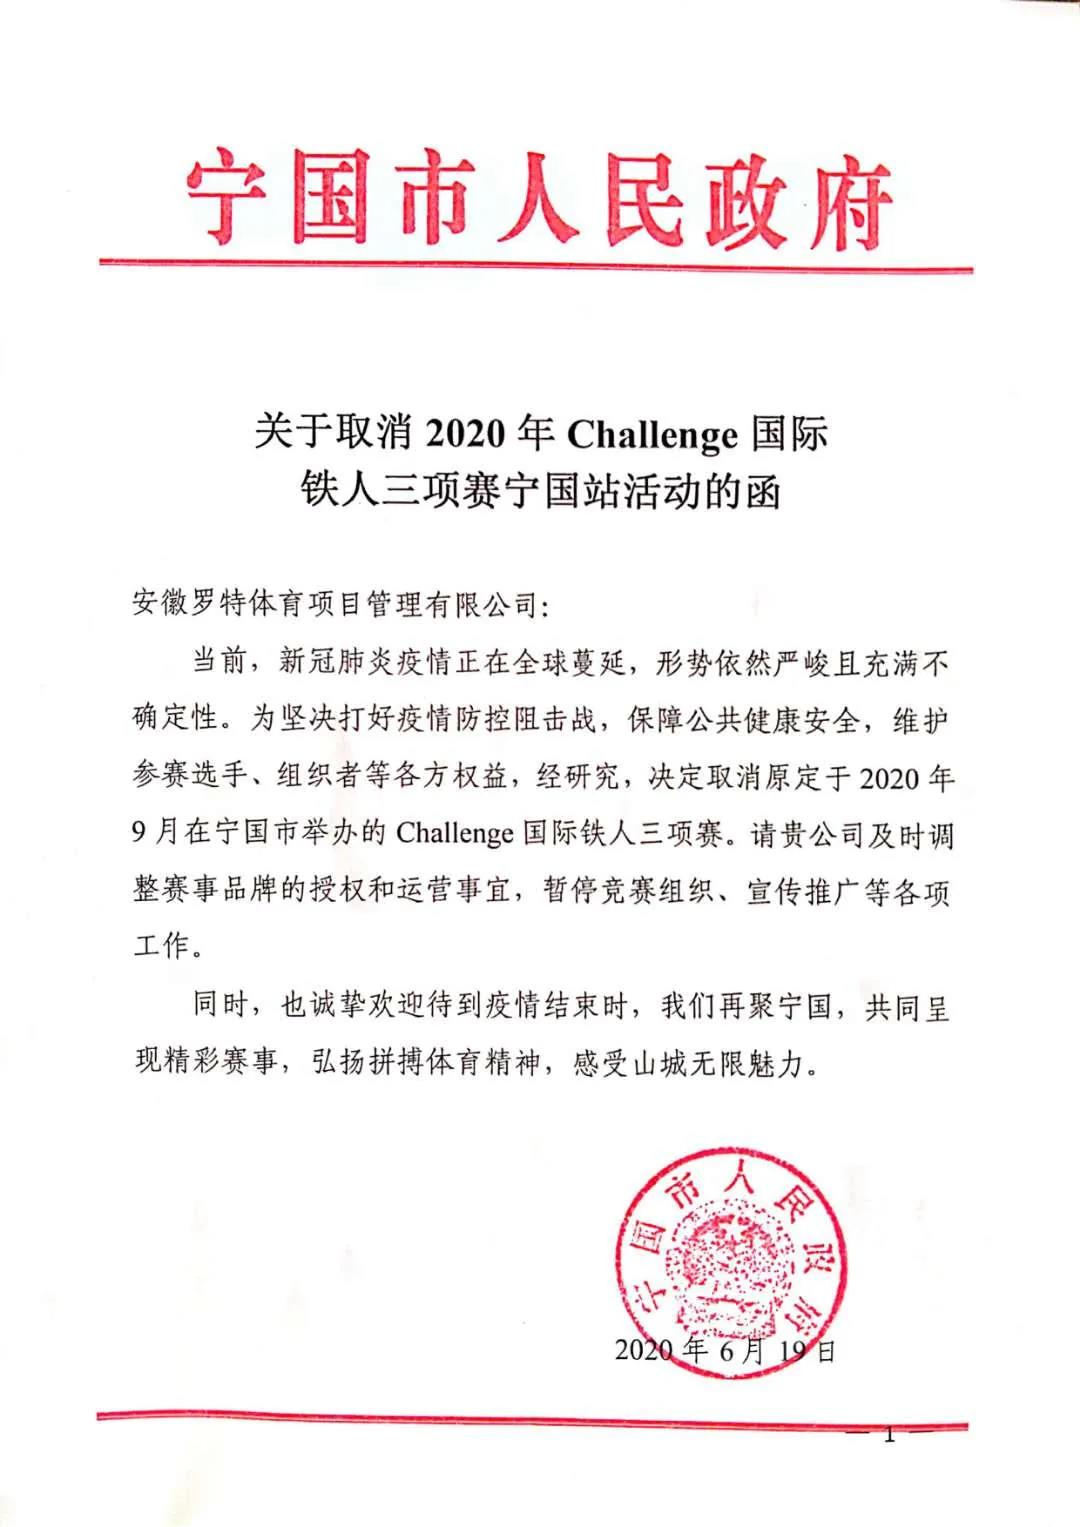 2020CHALLENGE FAMILY 安徽站取消